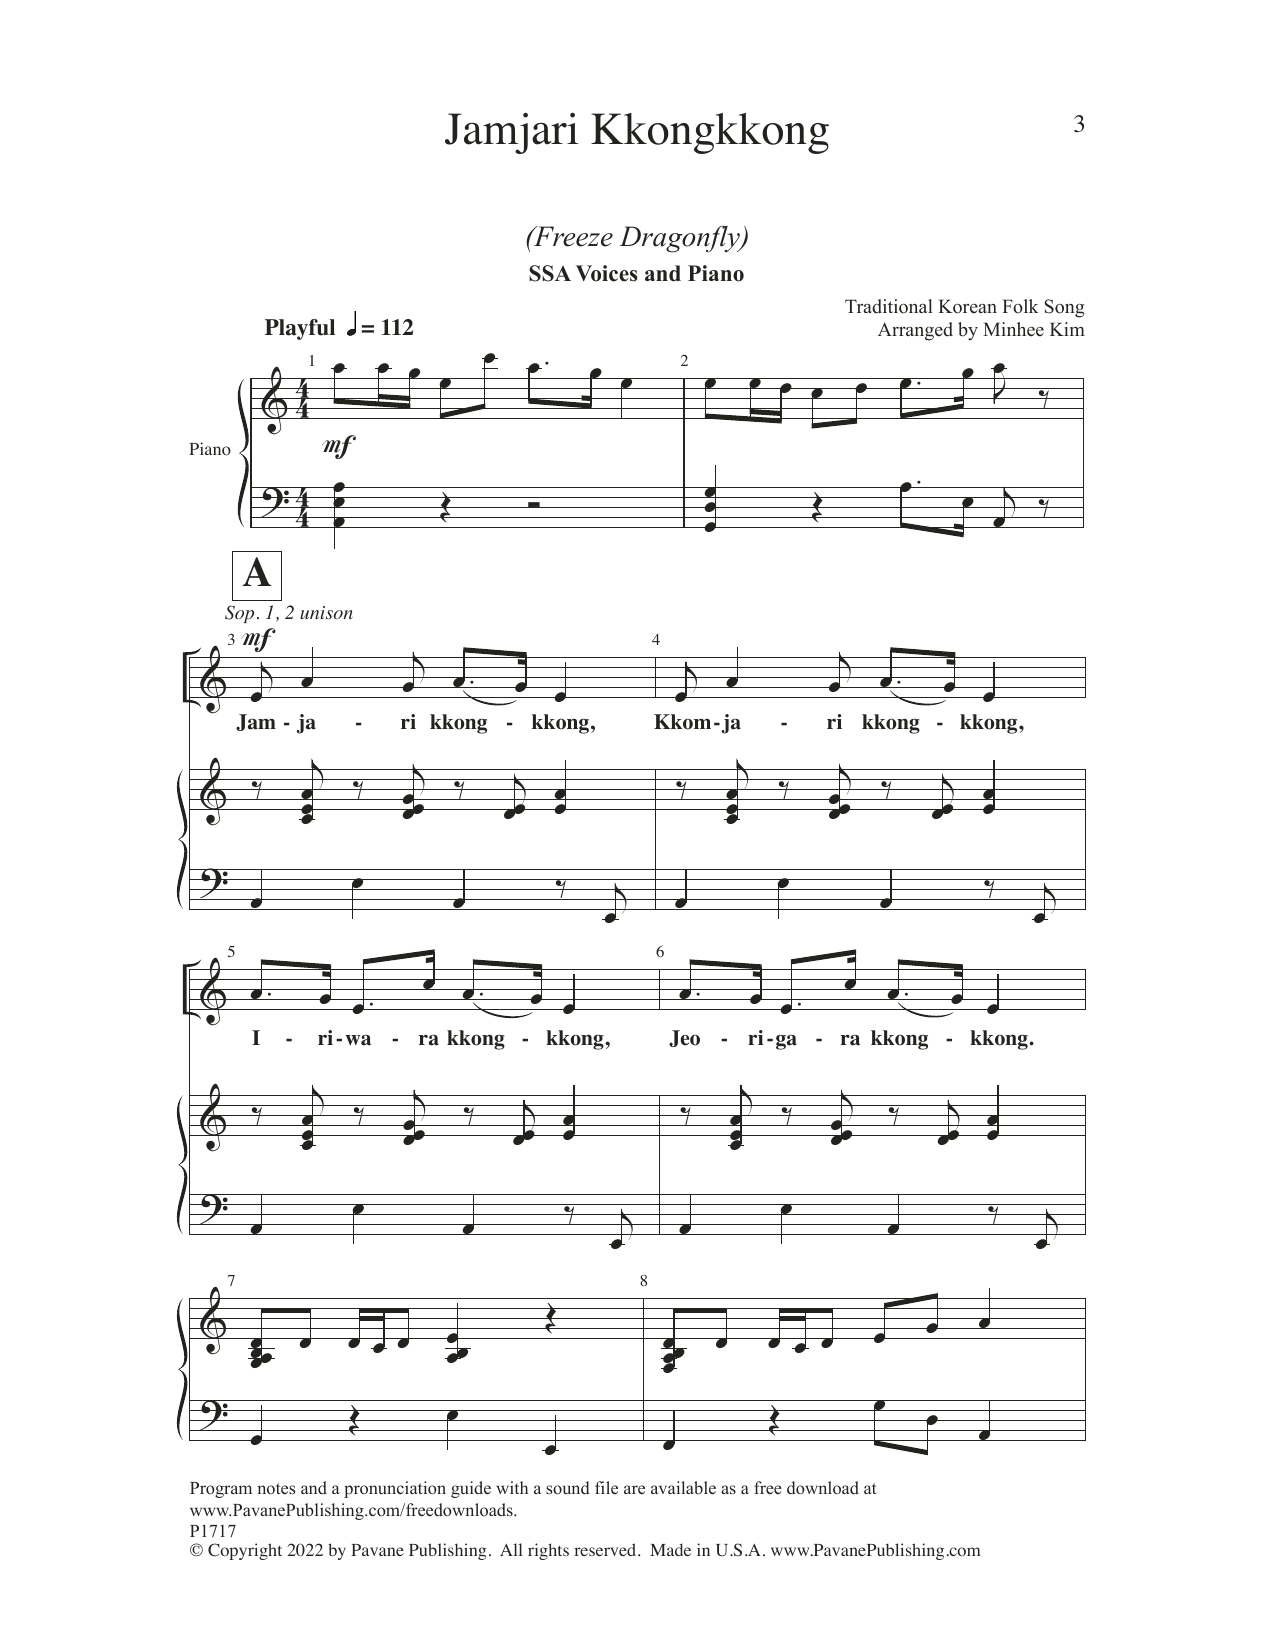 Traditional Korean Folk Song Jamjari Kkongkkong (Freeze Dragonfly) (arr. Minhee Kim) Sheet Music Notes & Chords for SSA Choir - Download or Print PDF